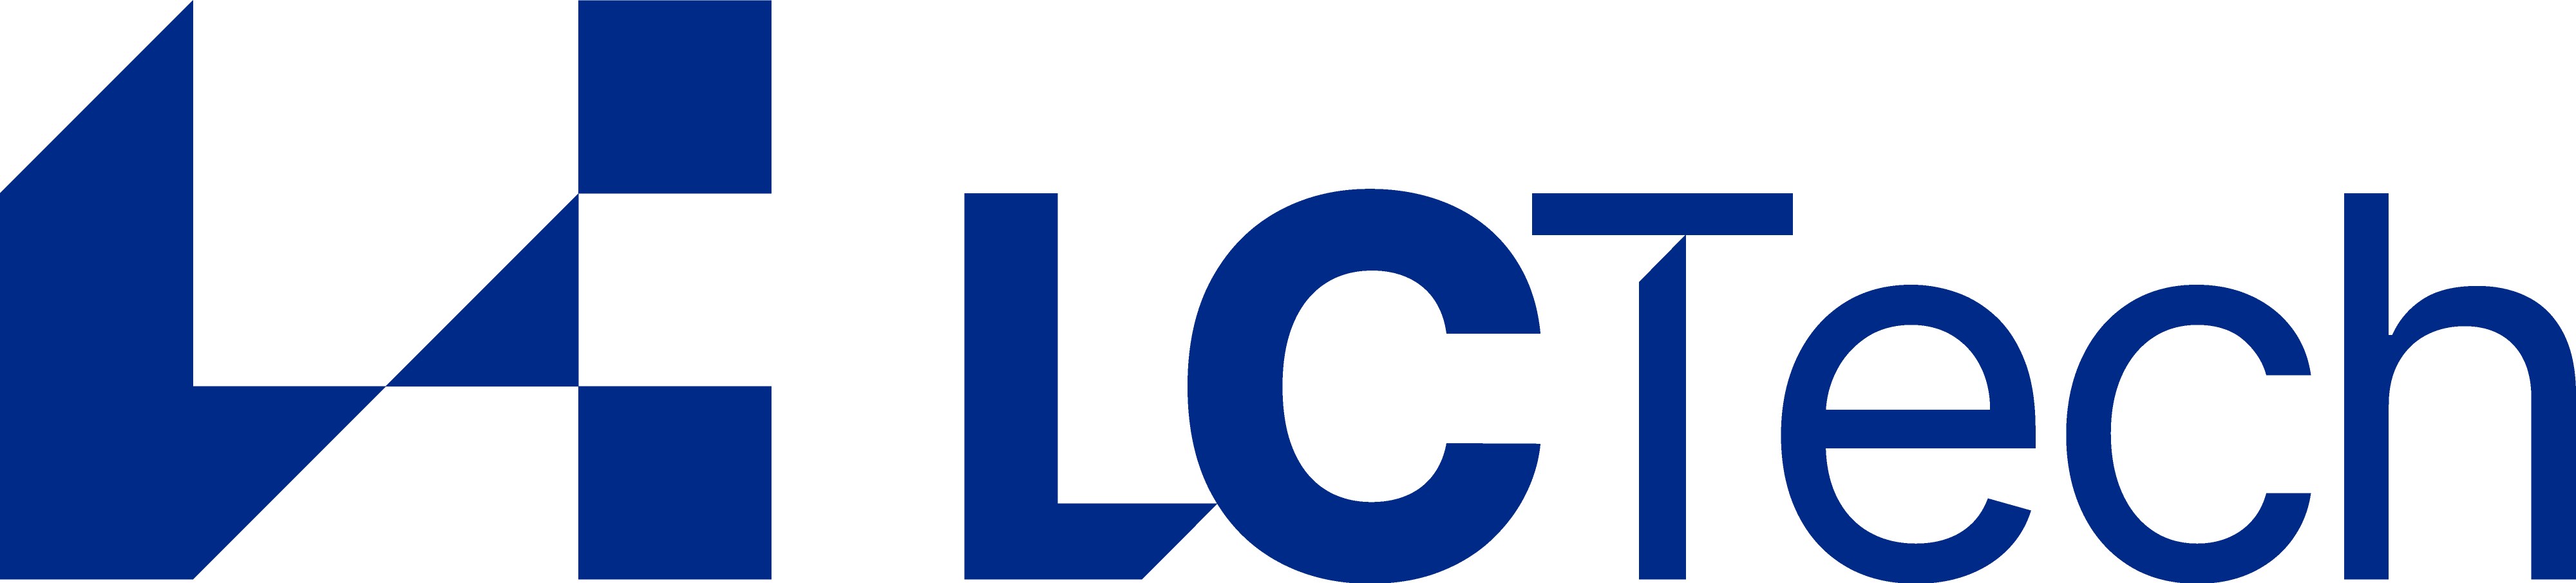 LCTech_Logo_rgb Recognition & Partnerships